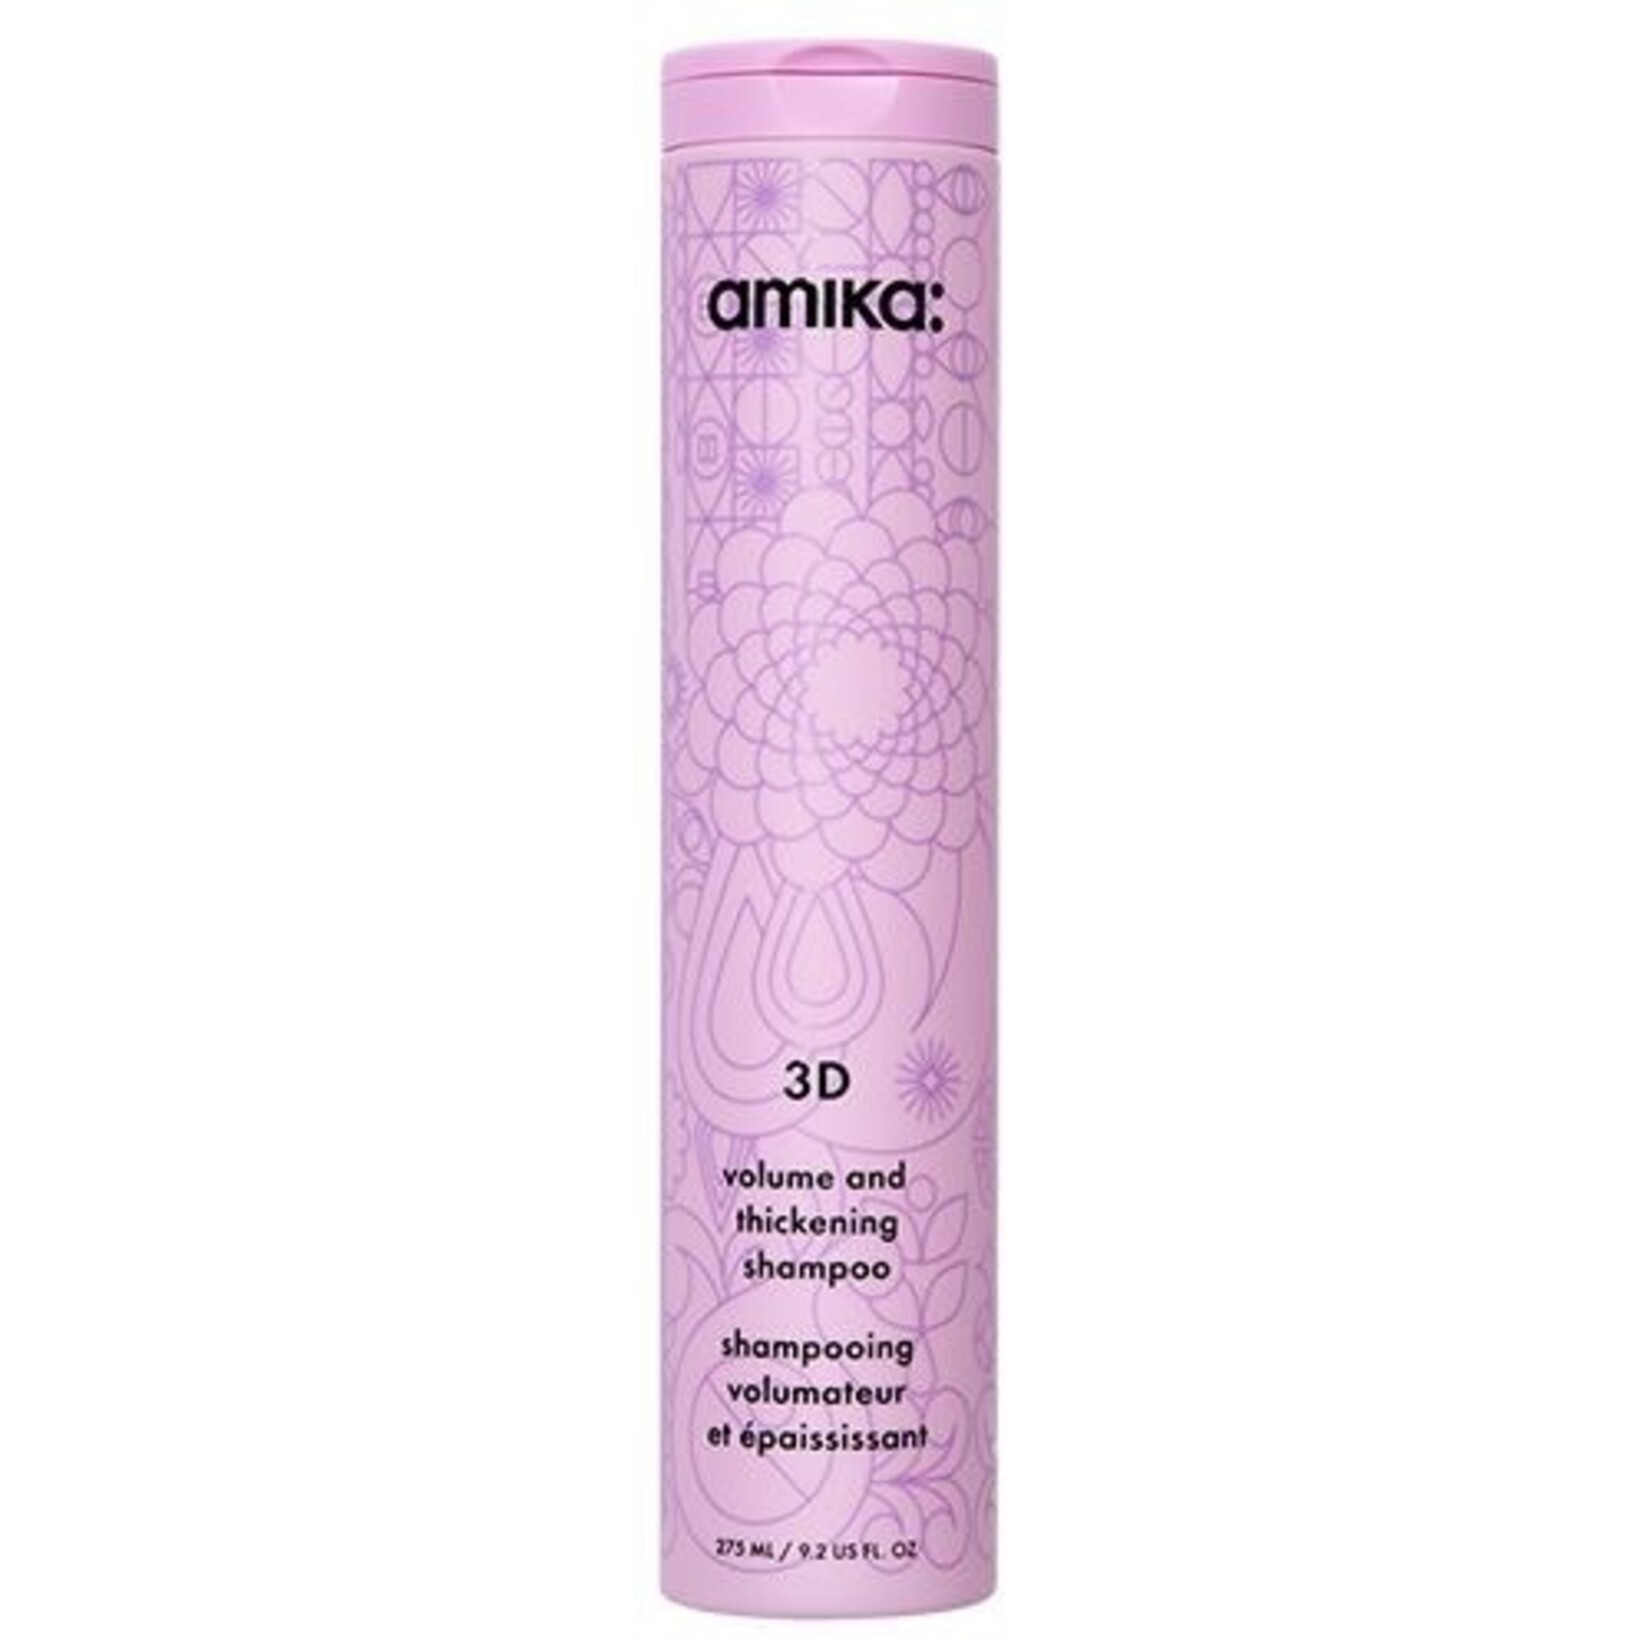 Amika: Amika: - 3D - Volume and thickening shampoo 275ml